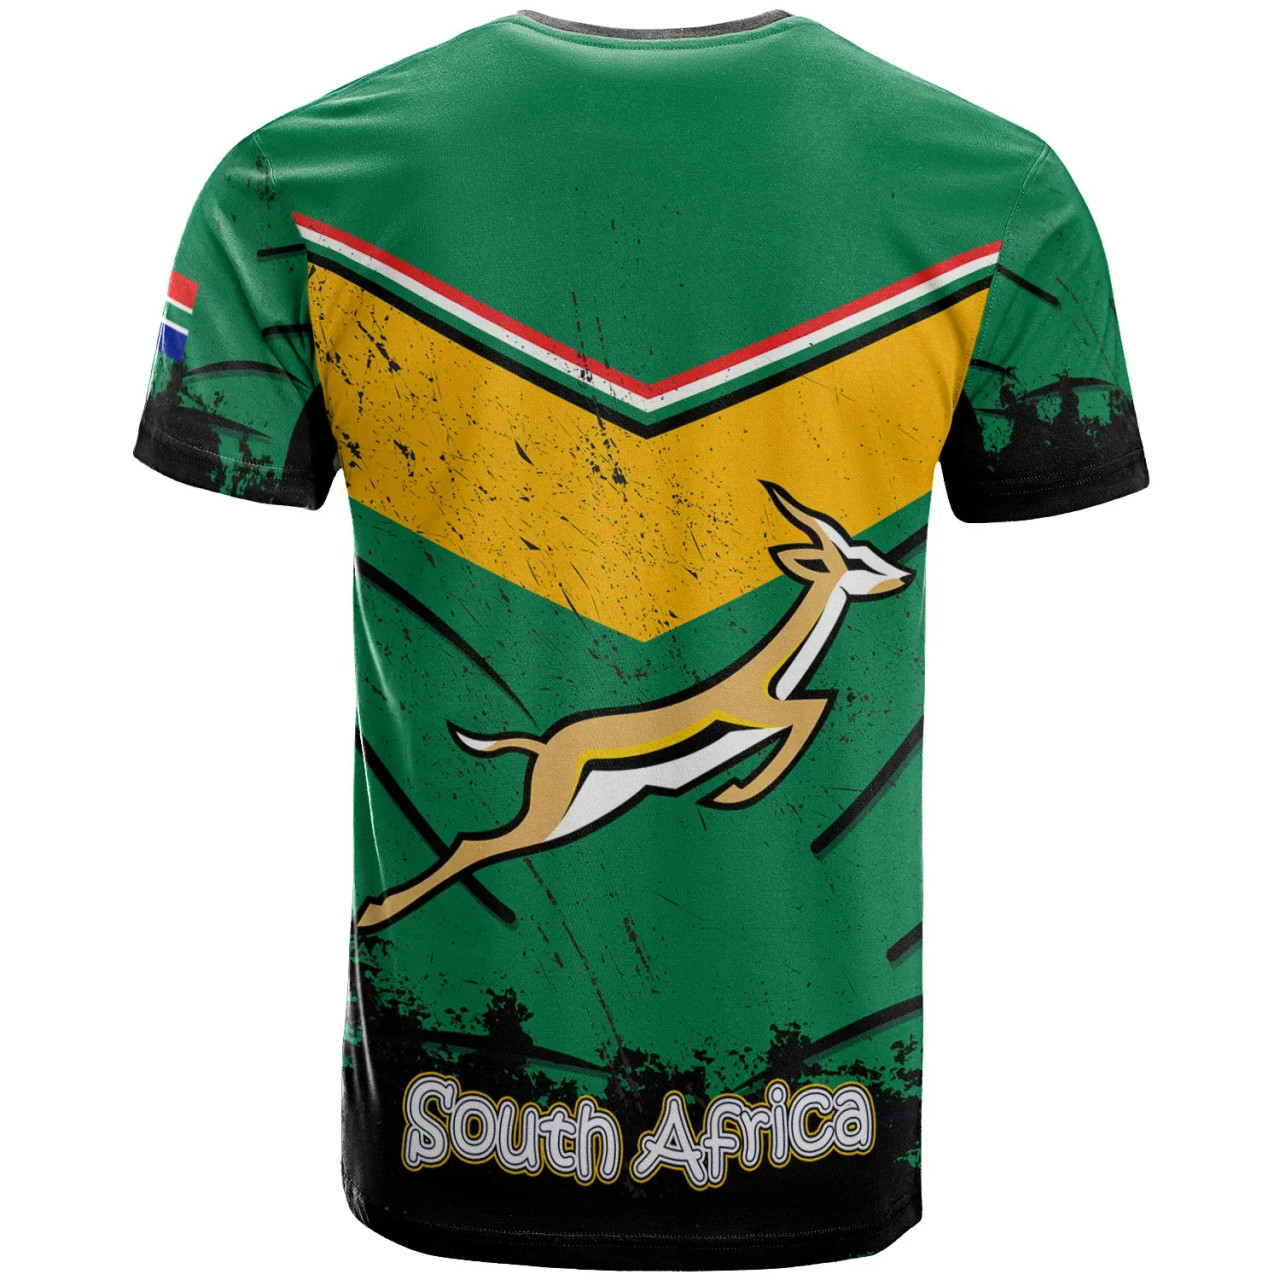 South Africa T-Shirt - Africa Vintage Grunge Style T-Shirt Desert Fashion 2